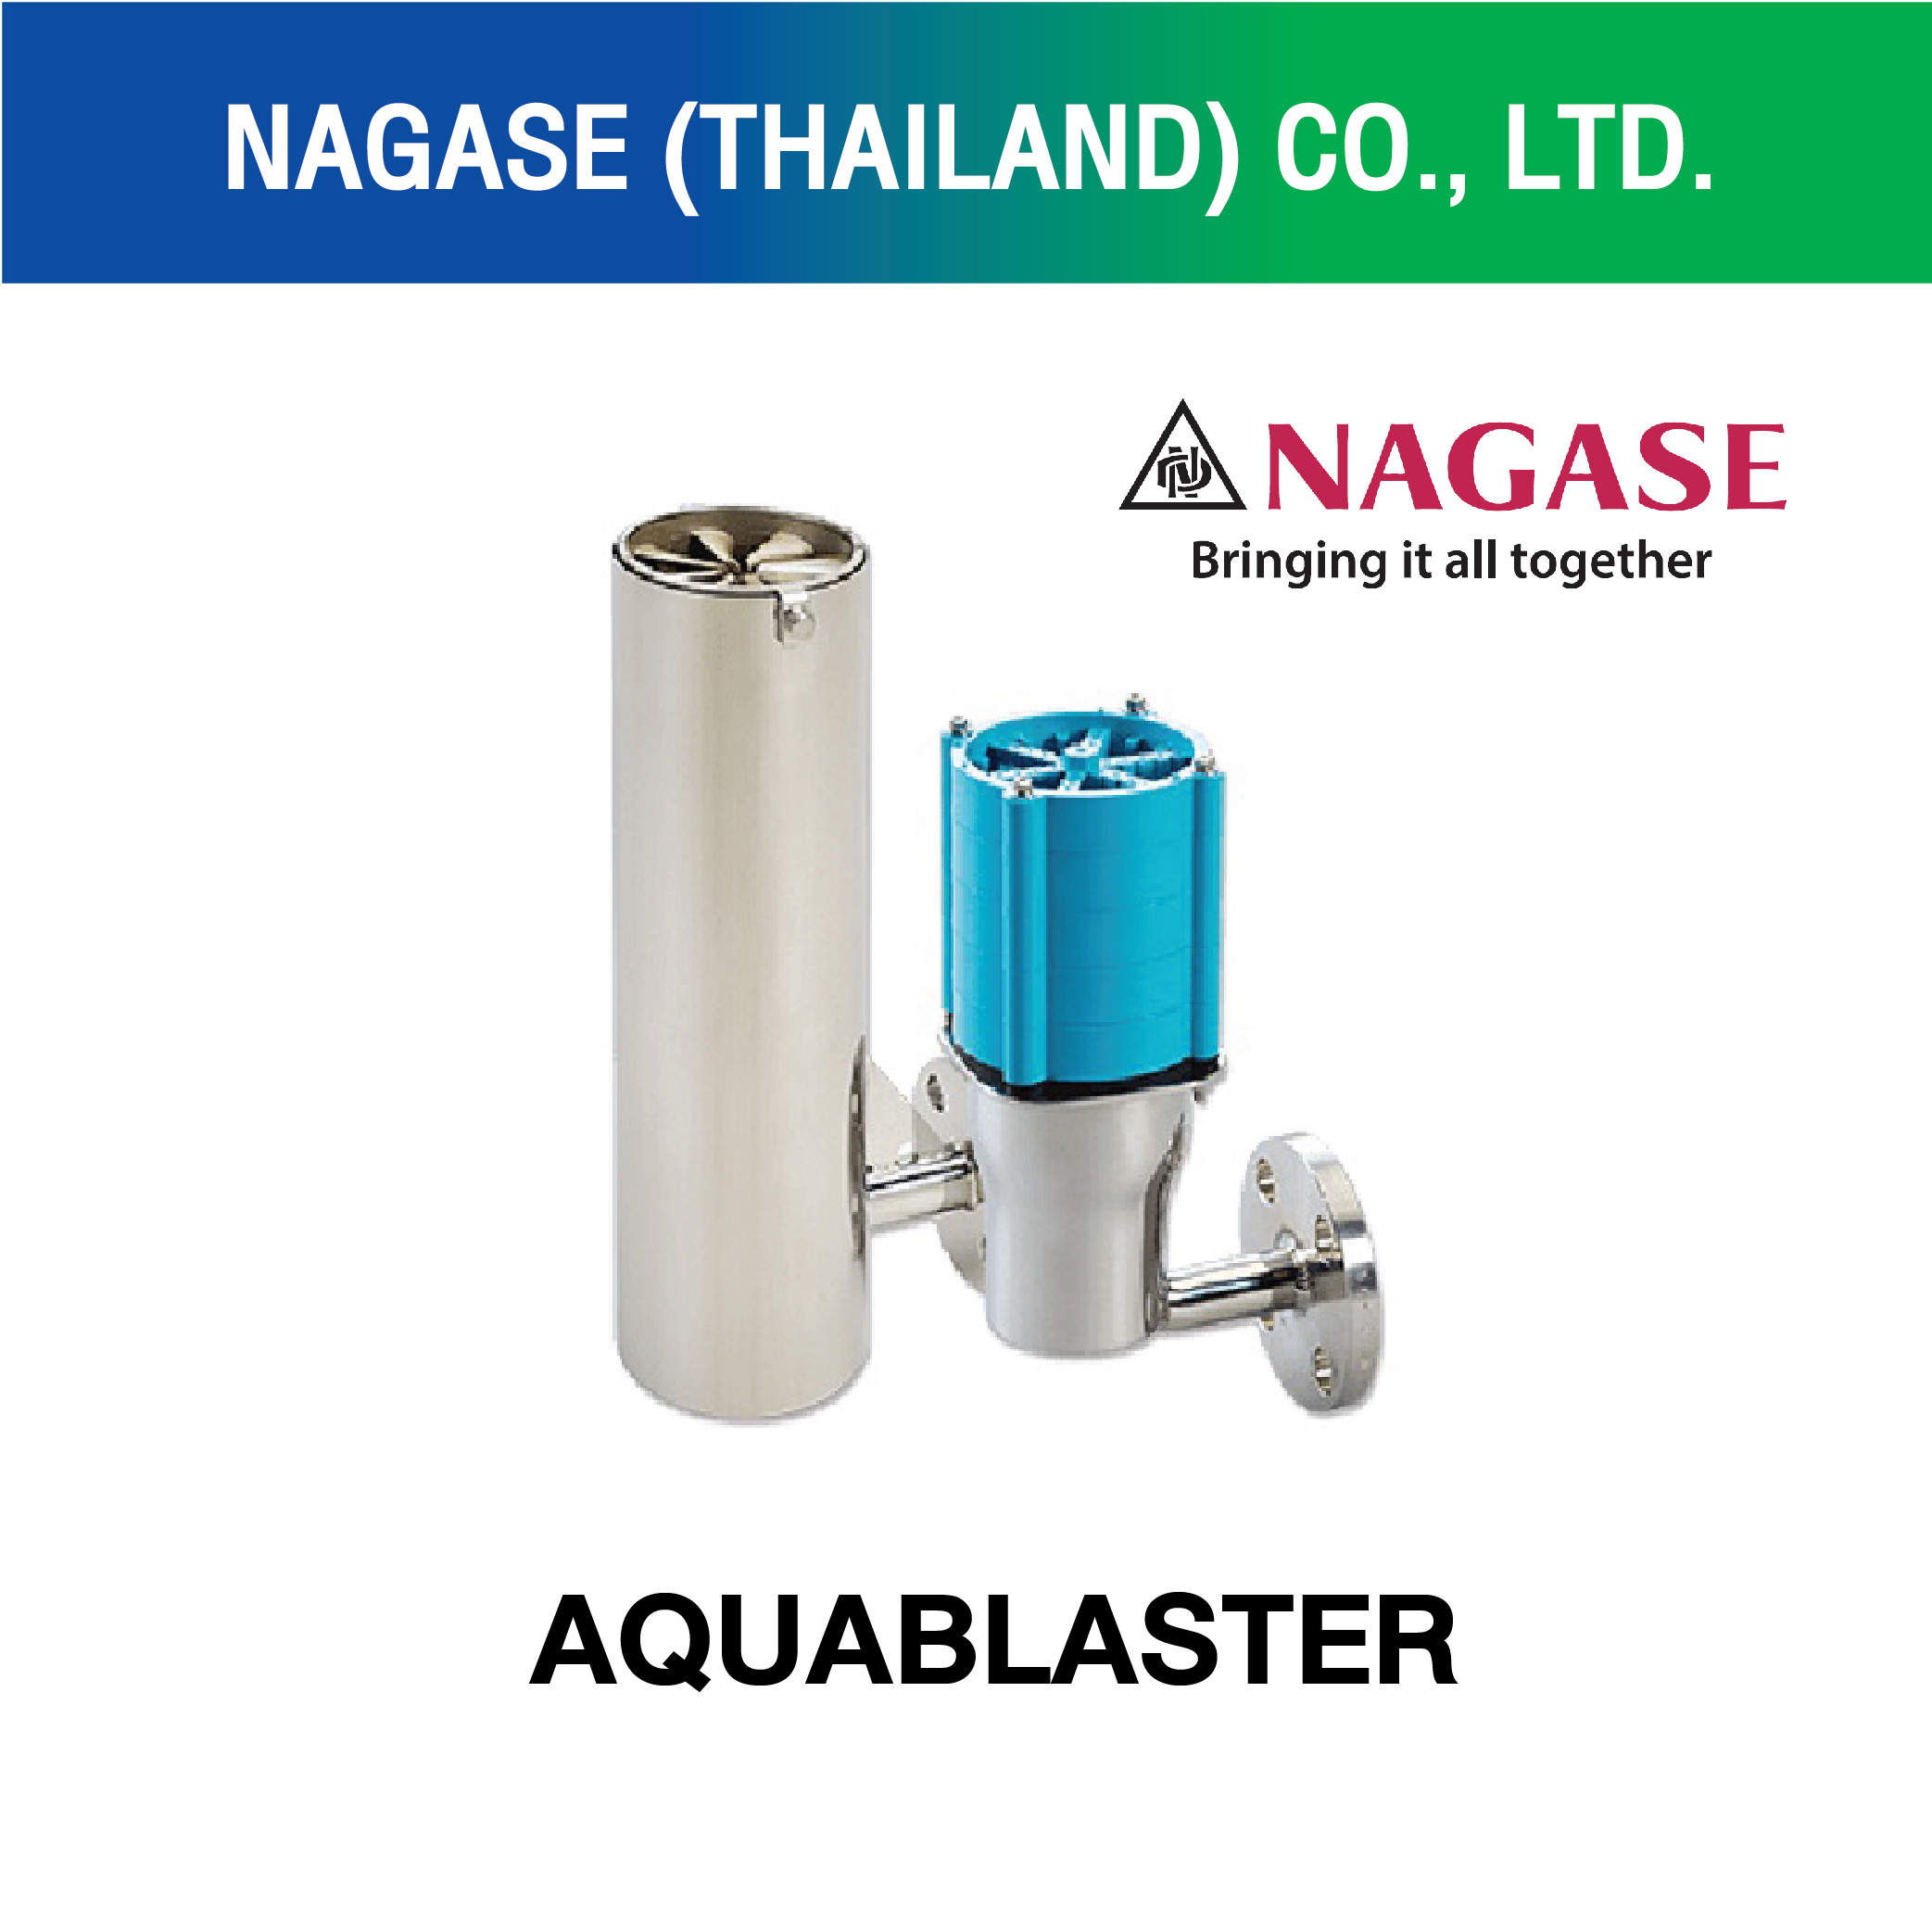 Nagase (Thailand) Co., Ltd.